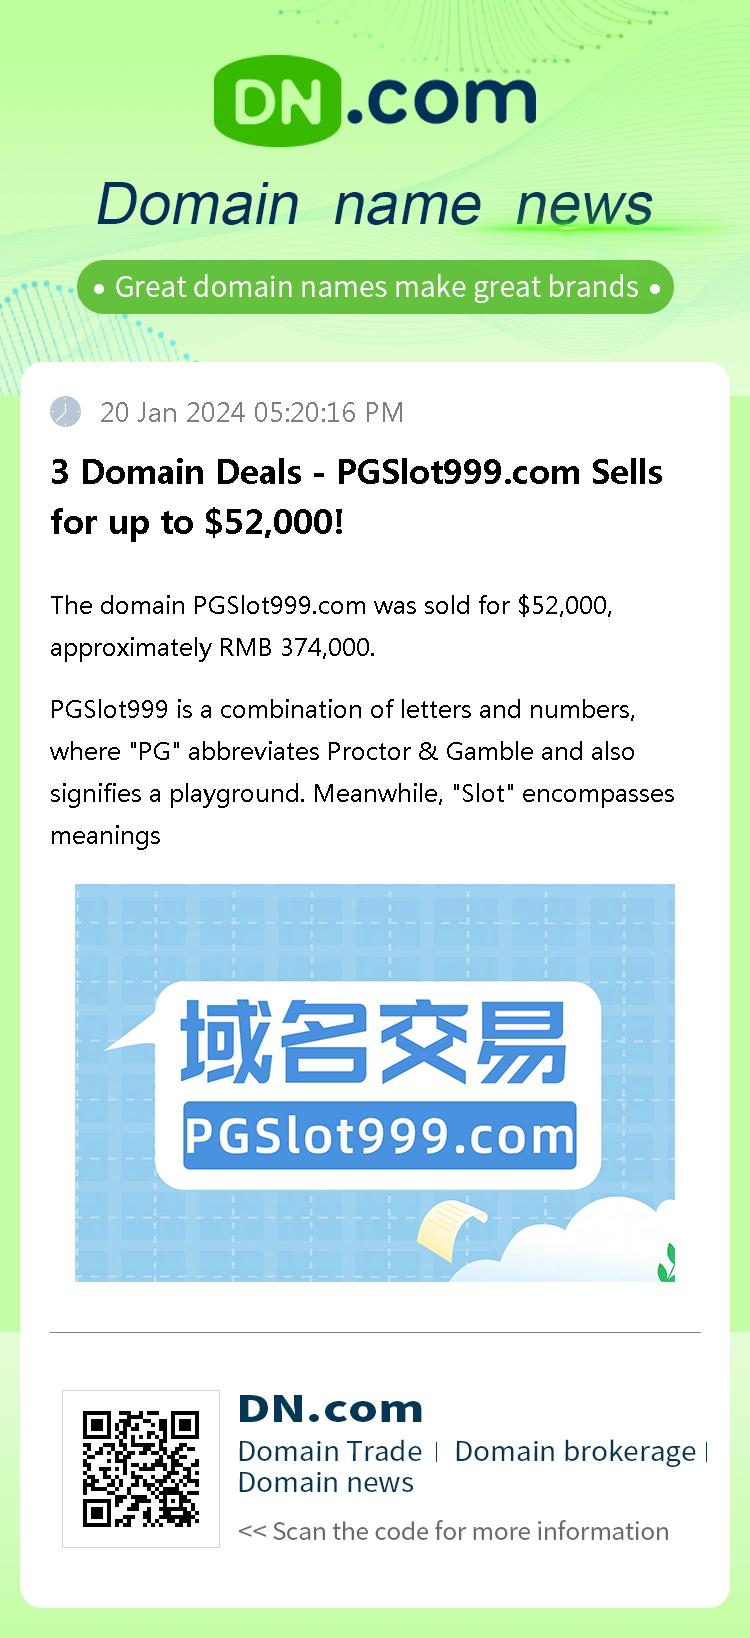 3 Domain Deals - PGSlot999.com Sells for up to $52,000!